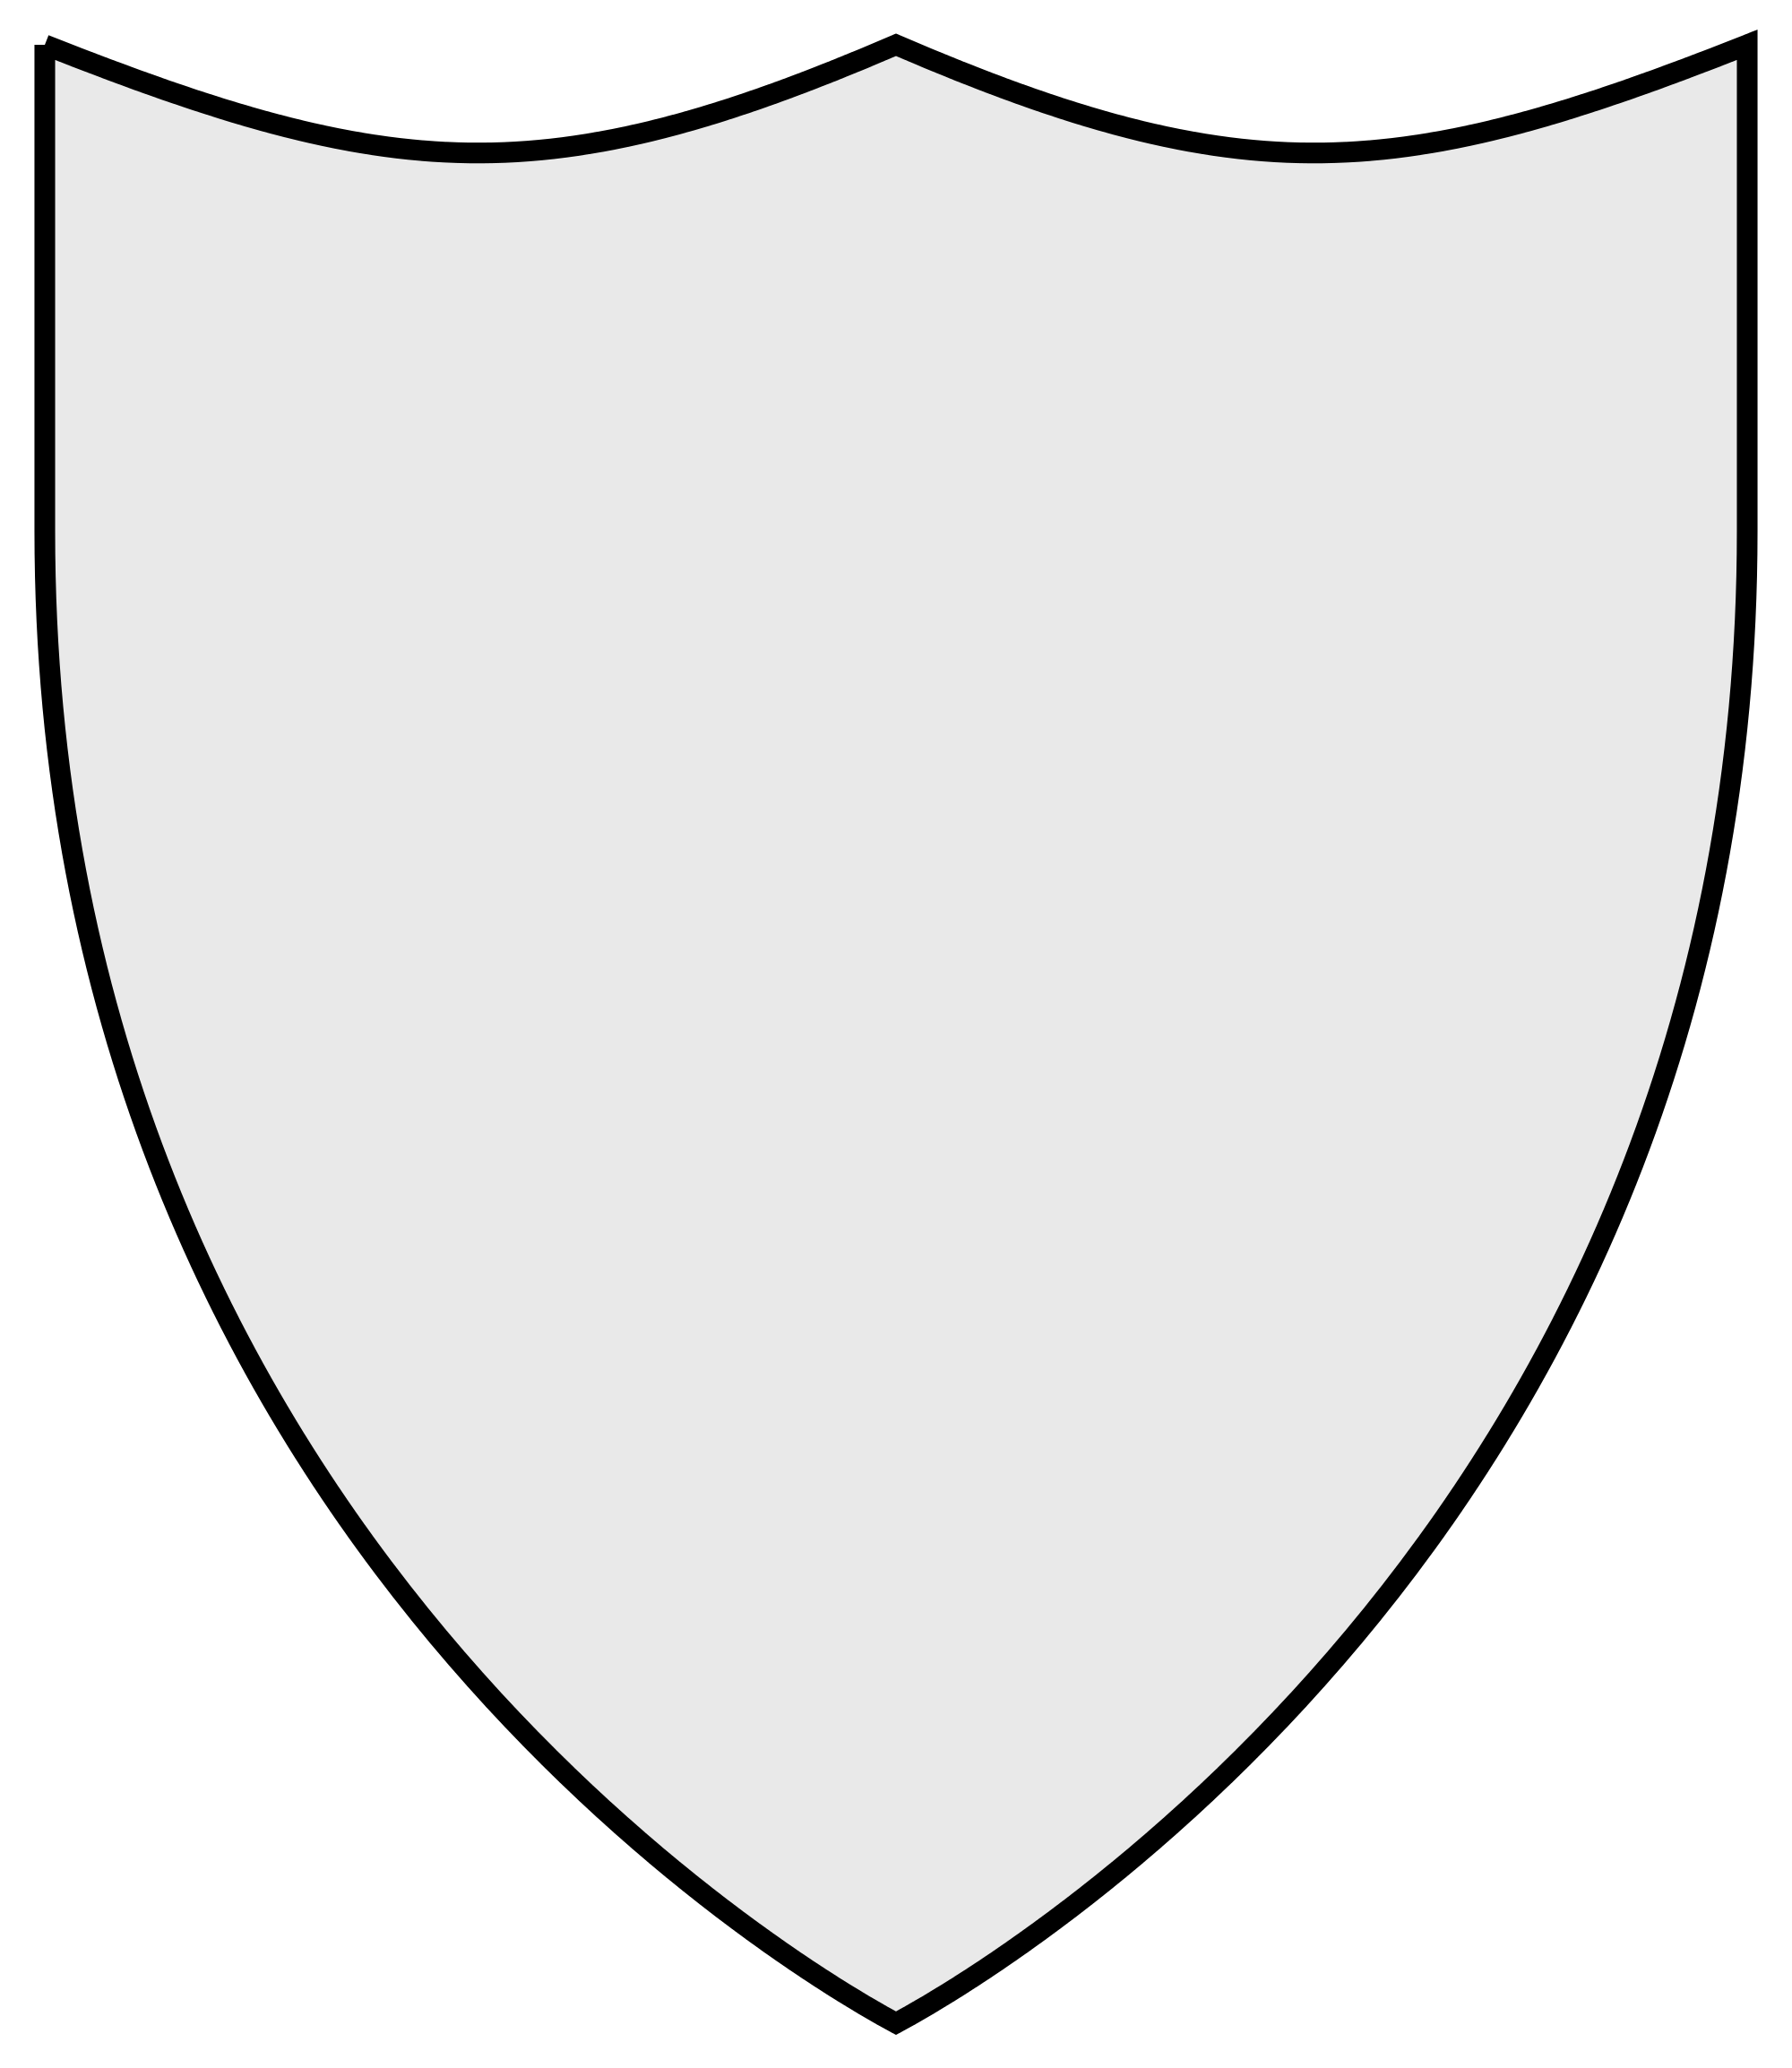 Clipart shield shield shape. File coa illustration triangular